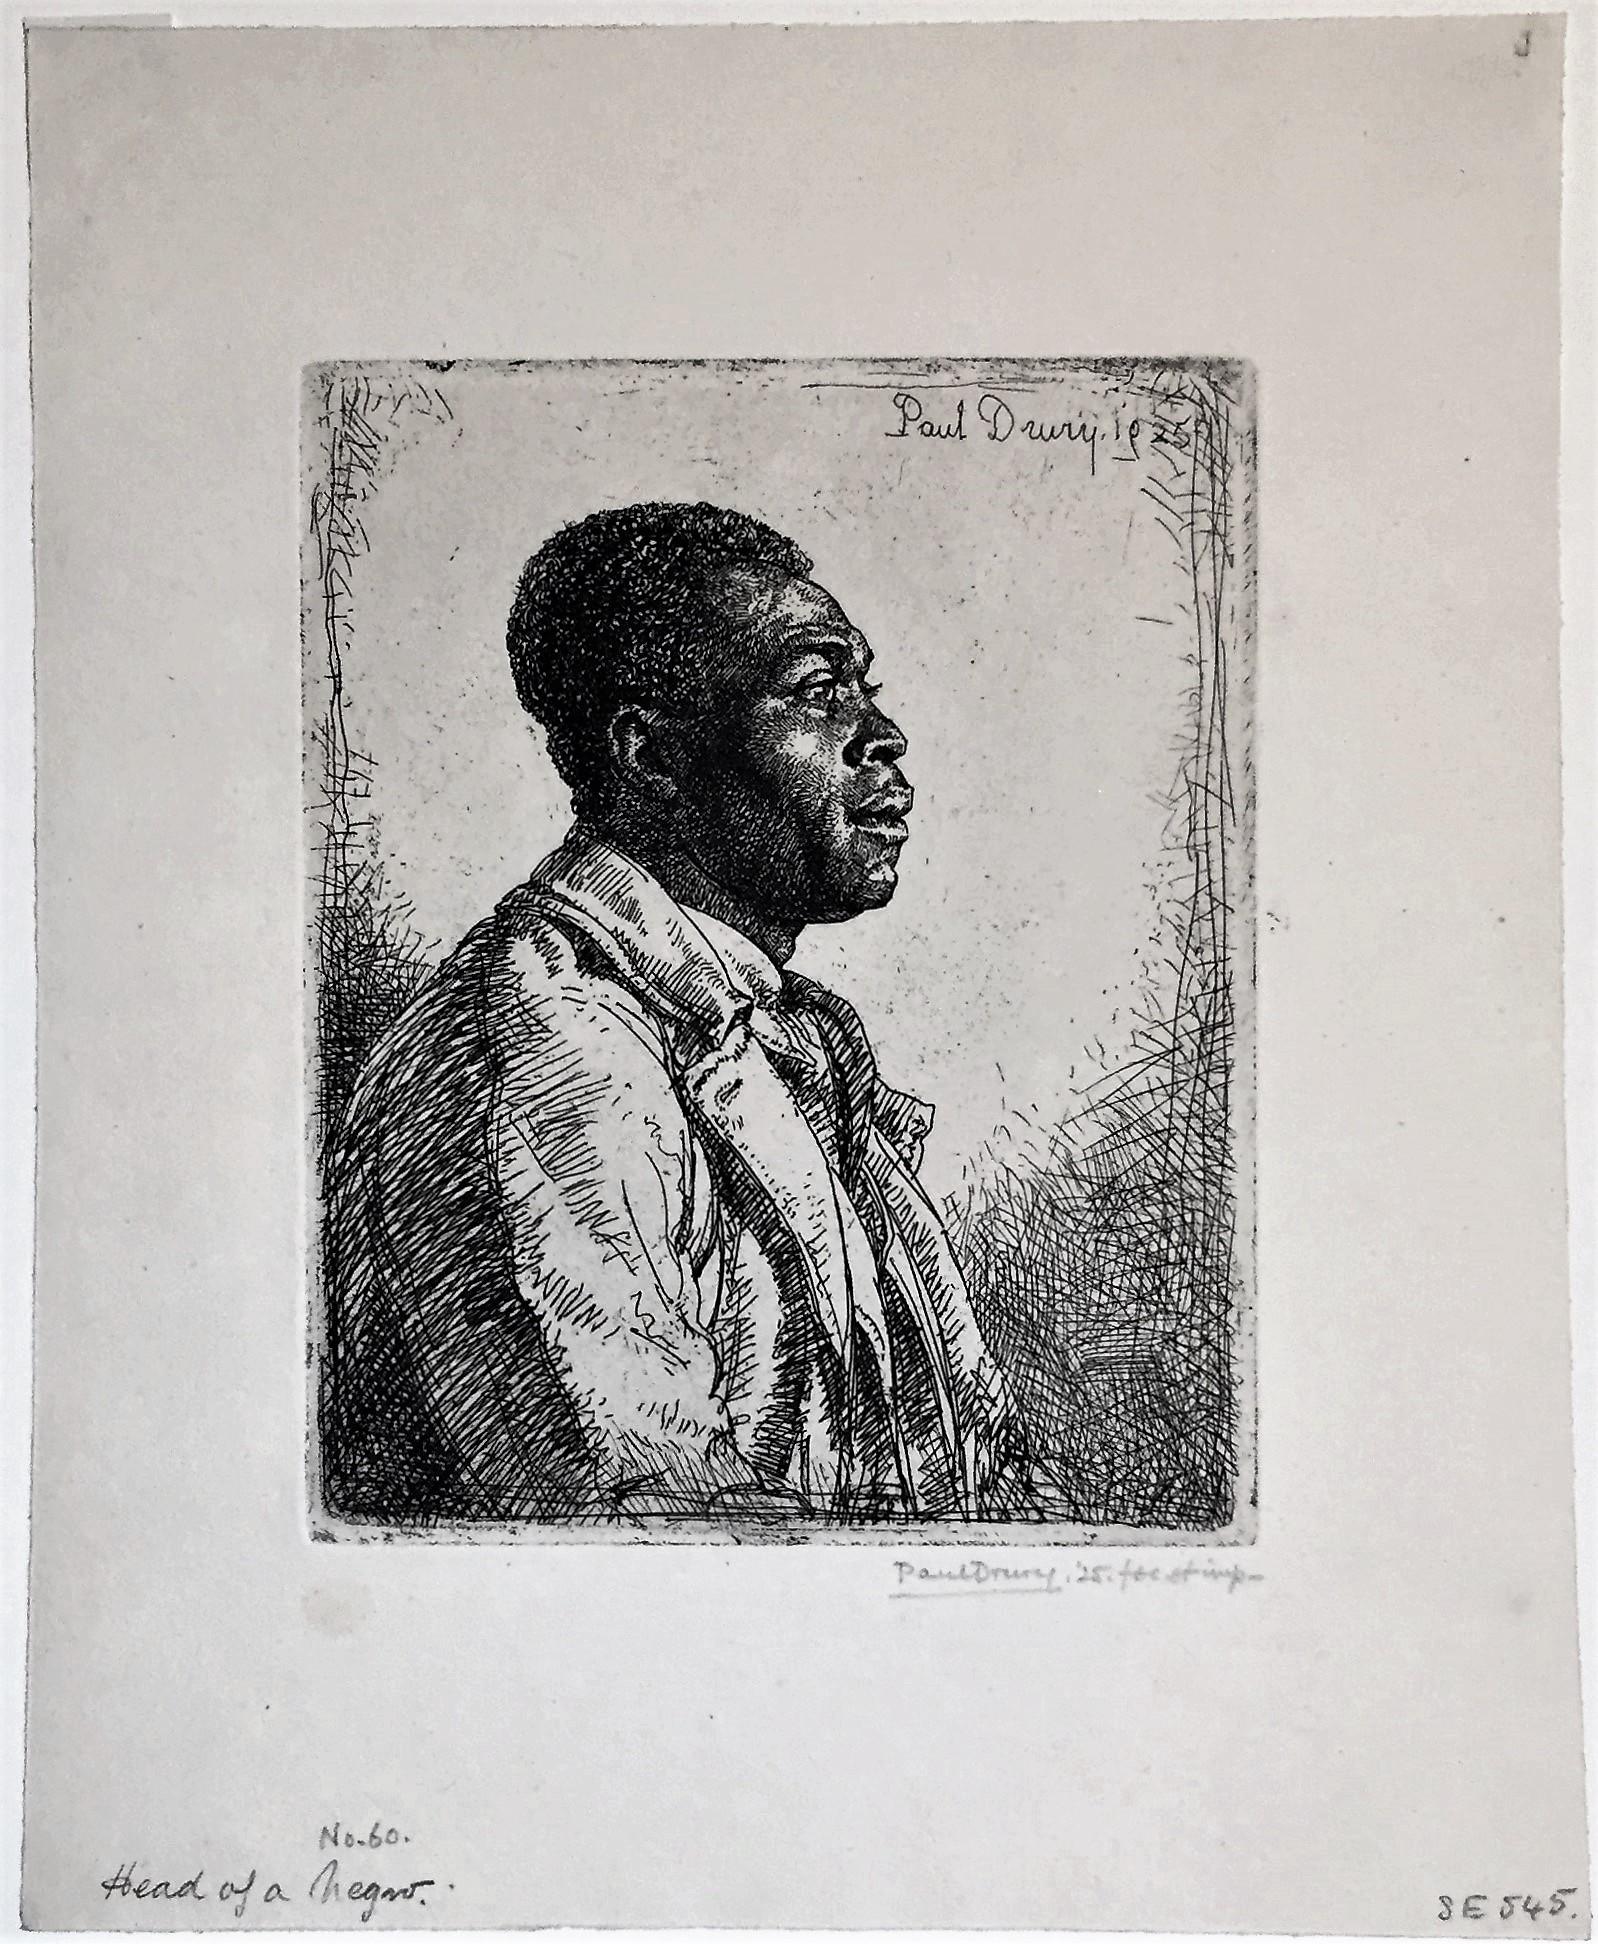 Head of a Negro.  - Print by Paul Dalou Drury R.E.